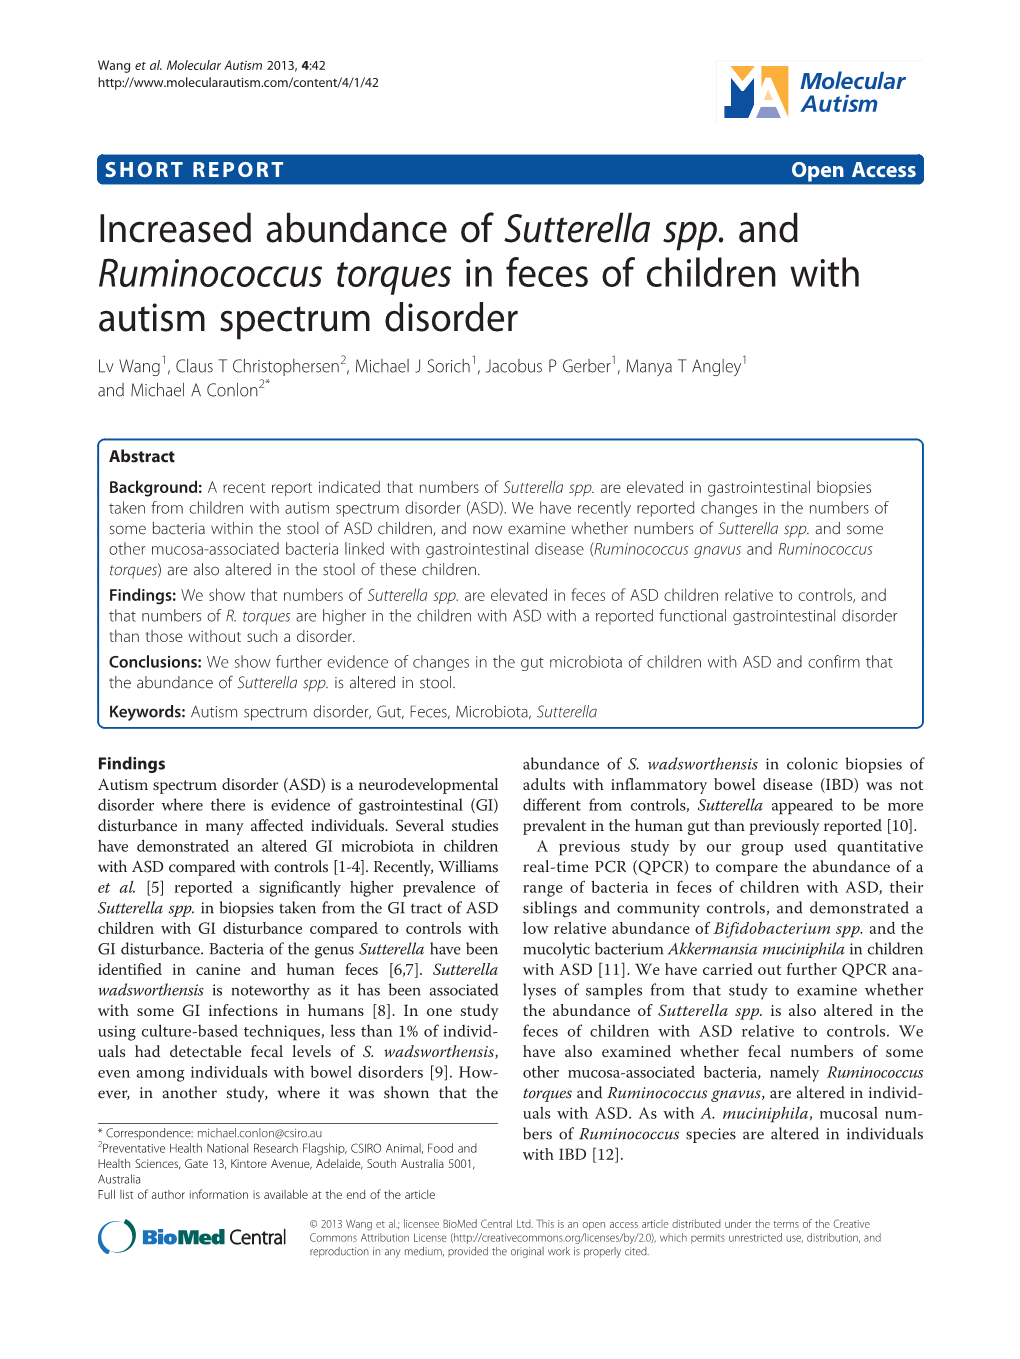 Increased Abundance of Sutterella Spp. and Ruminococcus Torques In